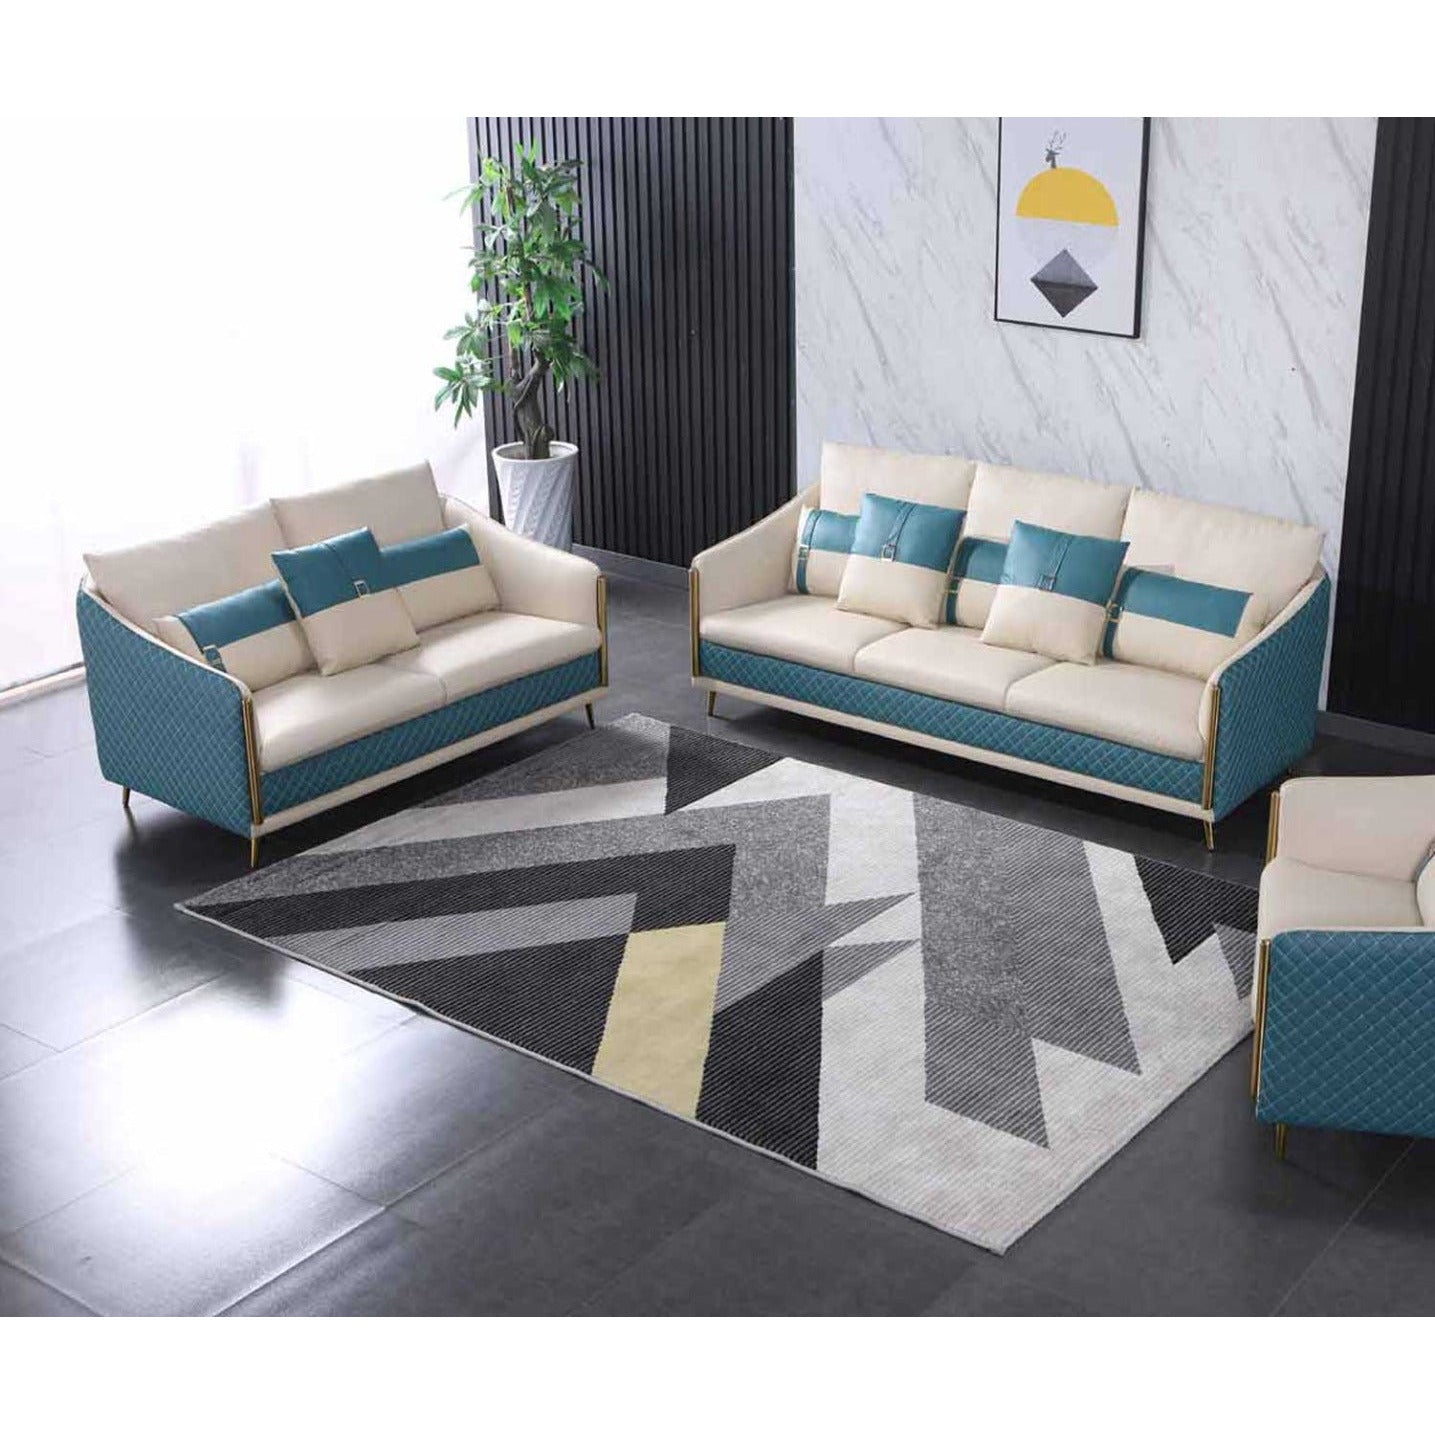 European Furniture - Icaro 2 Piece Living Room Set in Off White-Blue - 64457-2SET - New Star Living